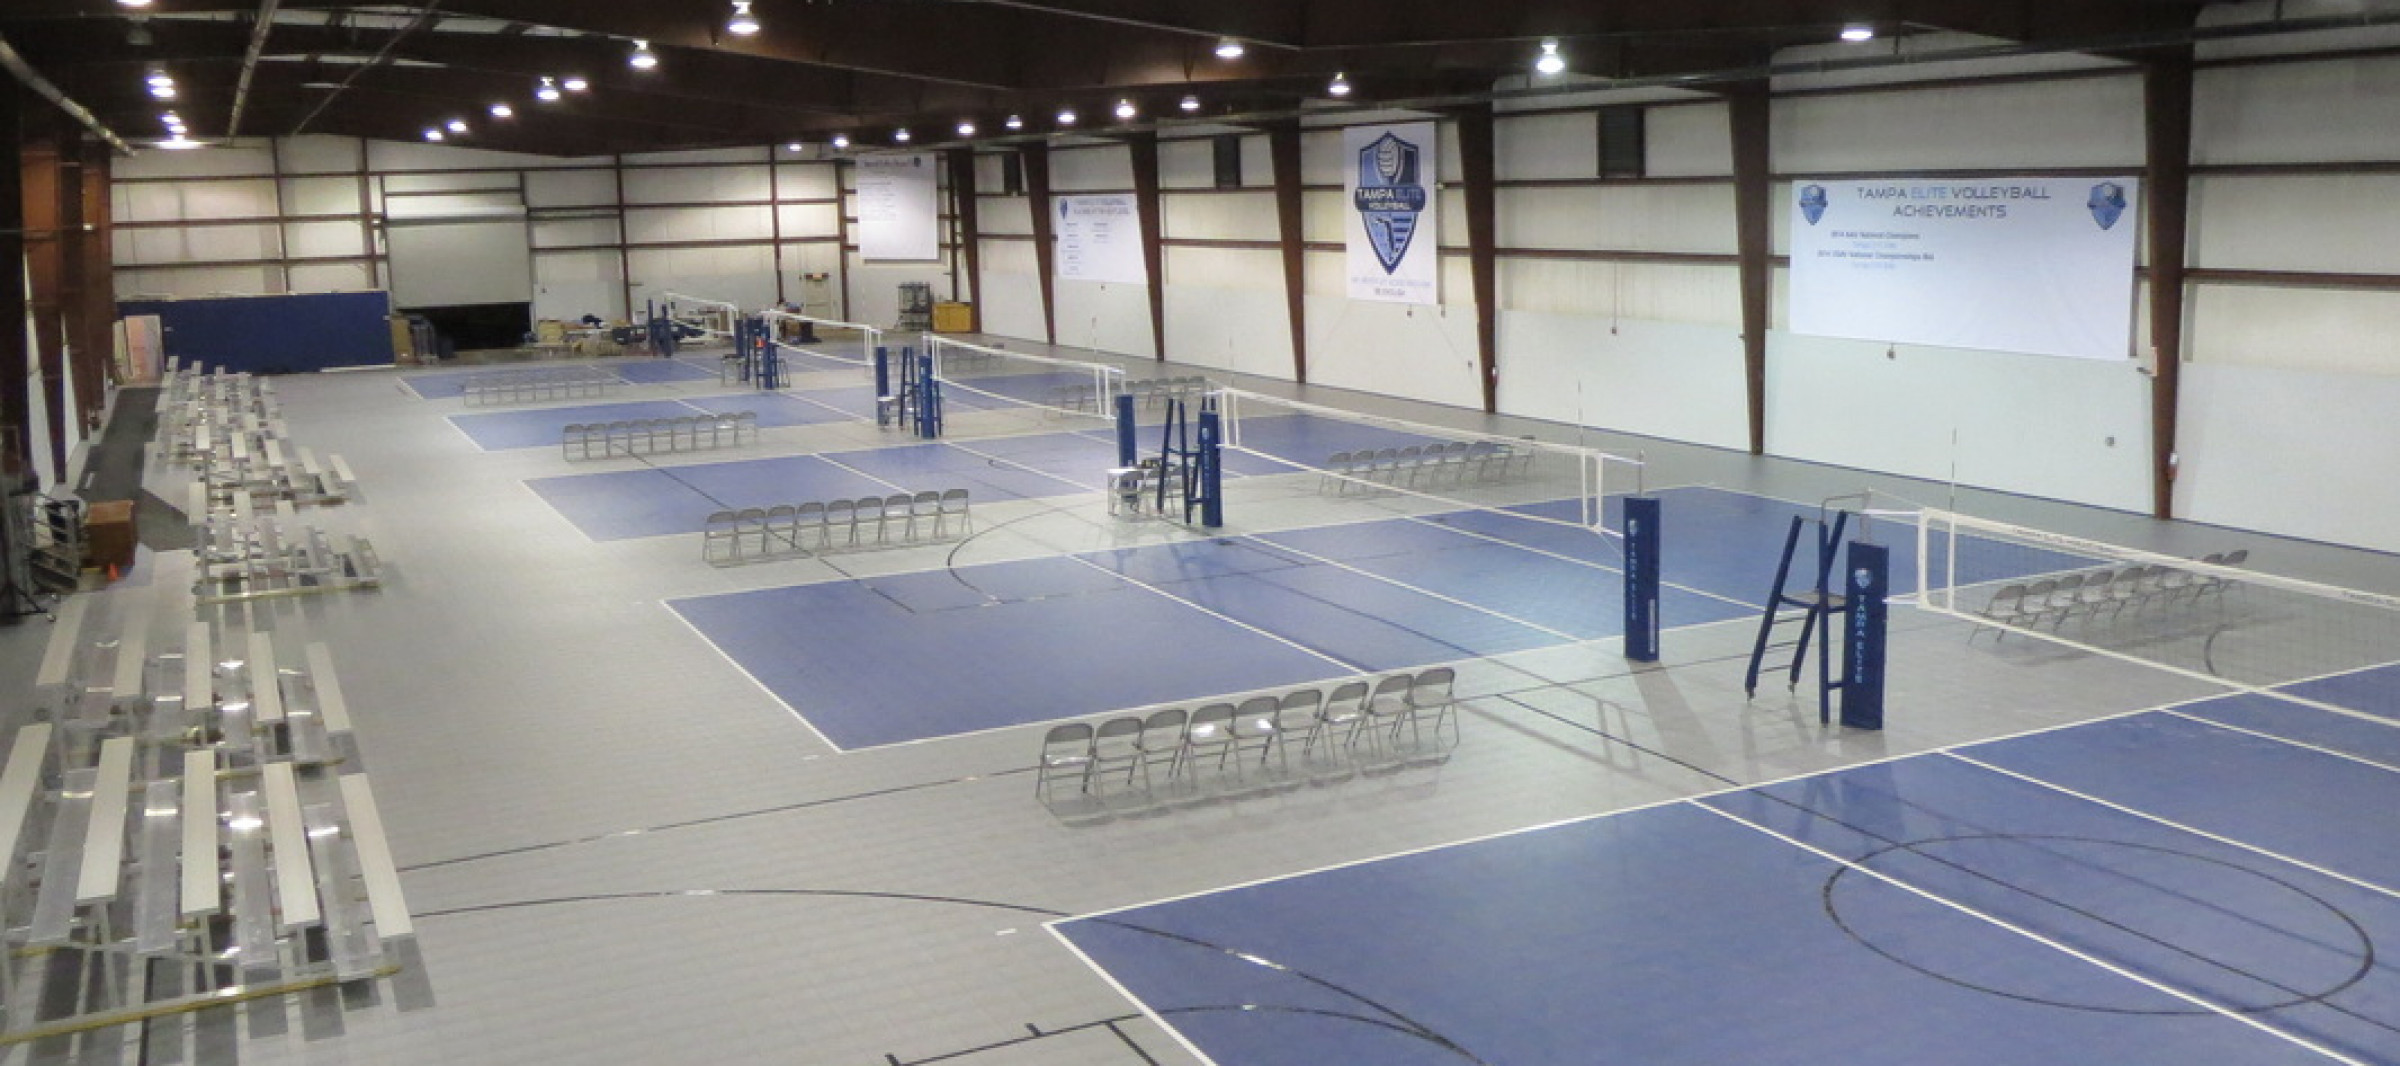 Indoor Volleyball Court Volleyball Floors Mateflex